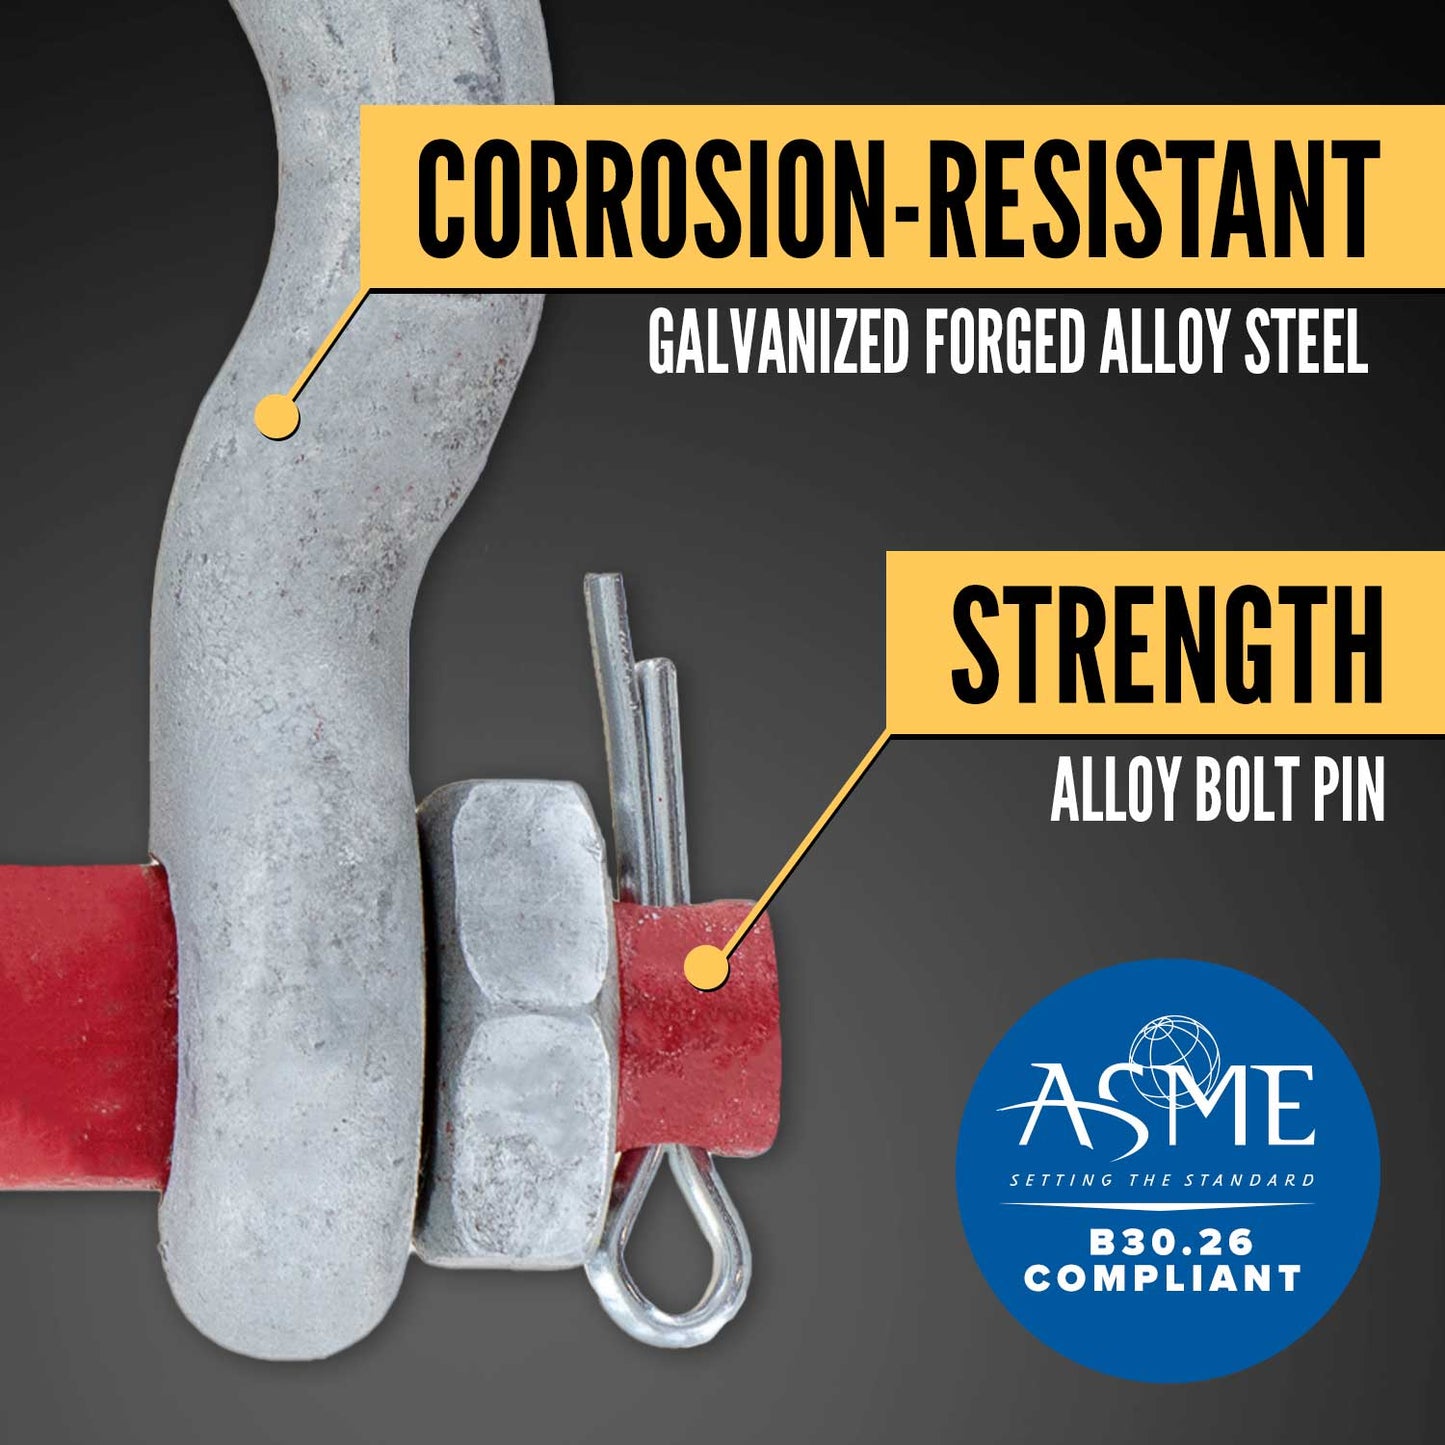 4" Crosby® Alloy Bolt Type Anchor Shackle | G-2140 - 175 Ton shackle construction